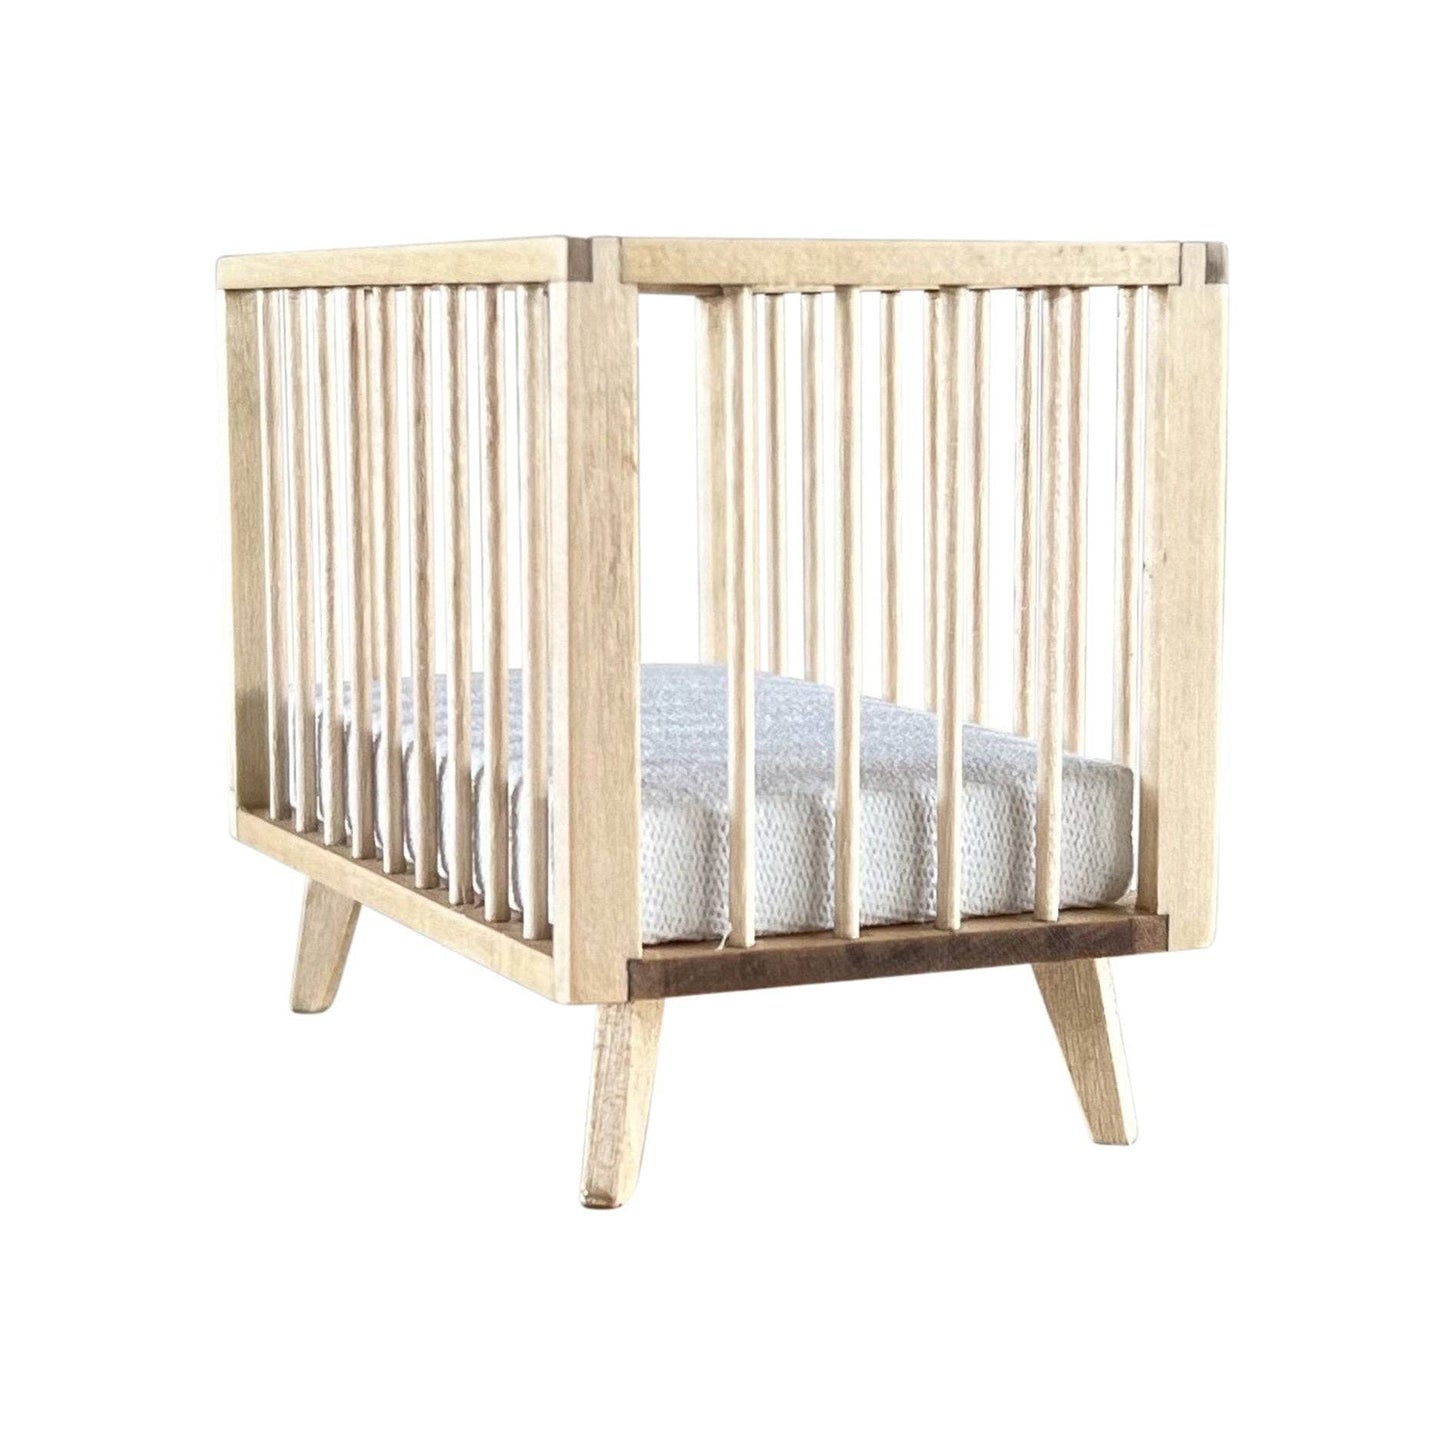 Dollhouse Nursery Crib + Mattress | Natural Wood